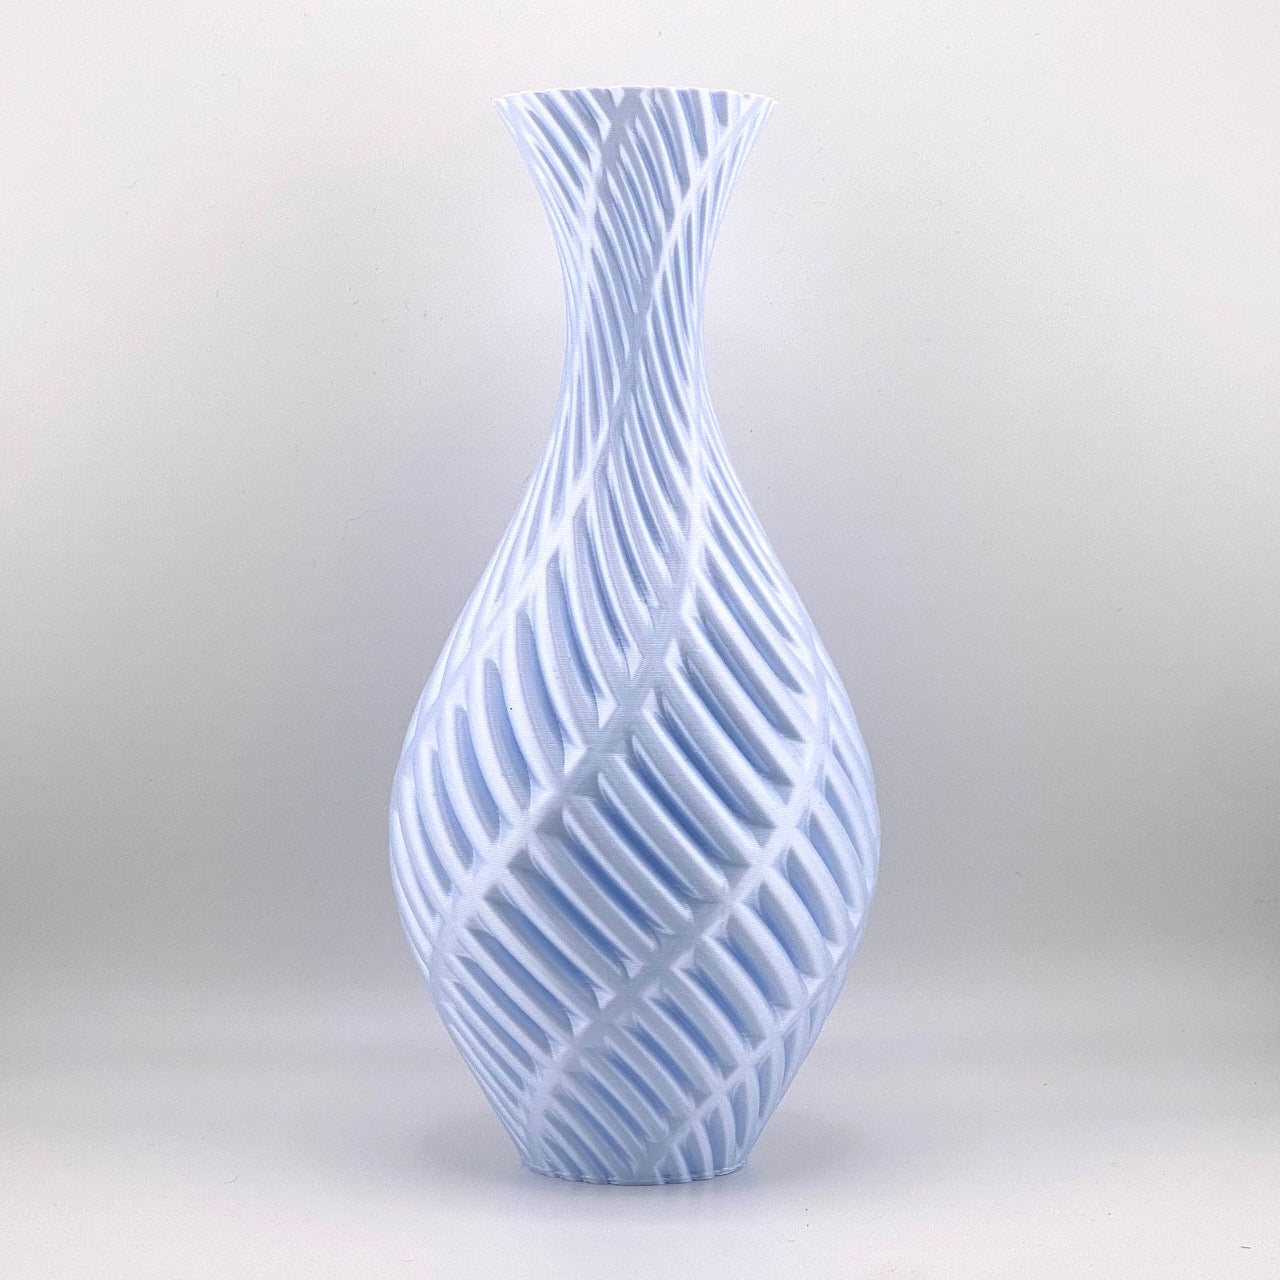 Fern 3D printed in Polar White glossy filament